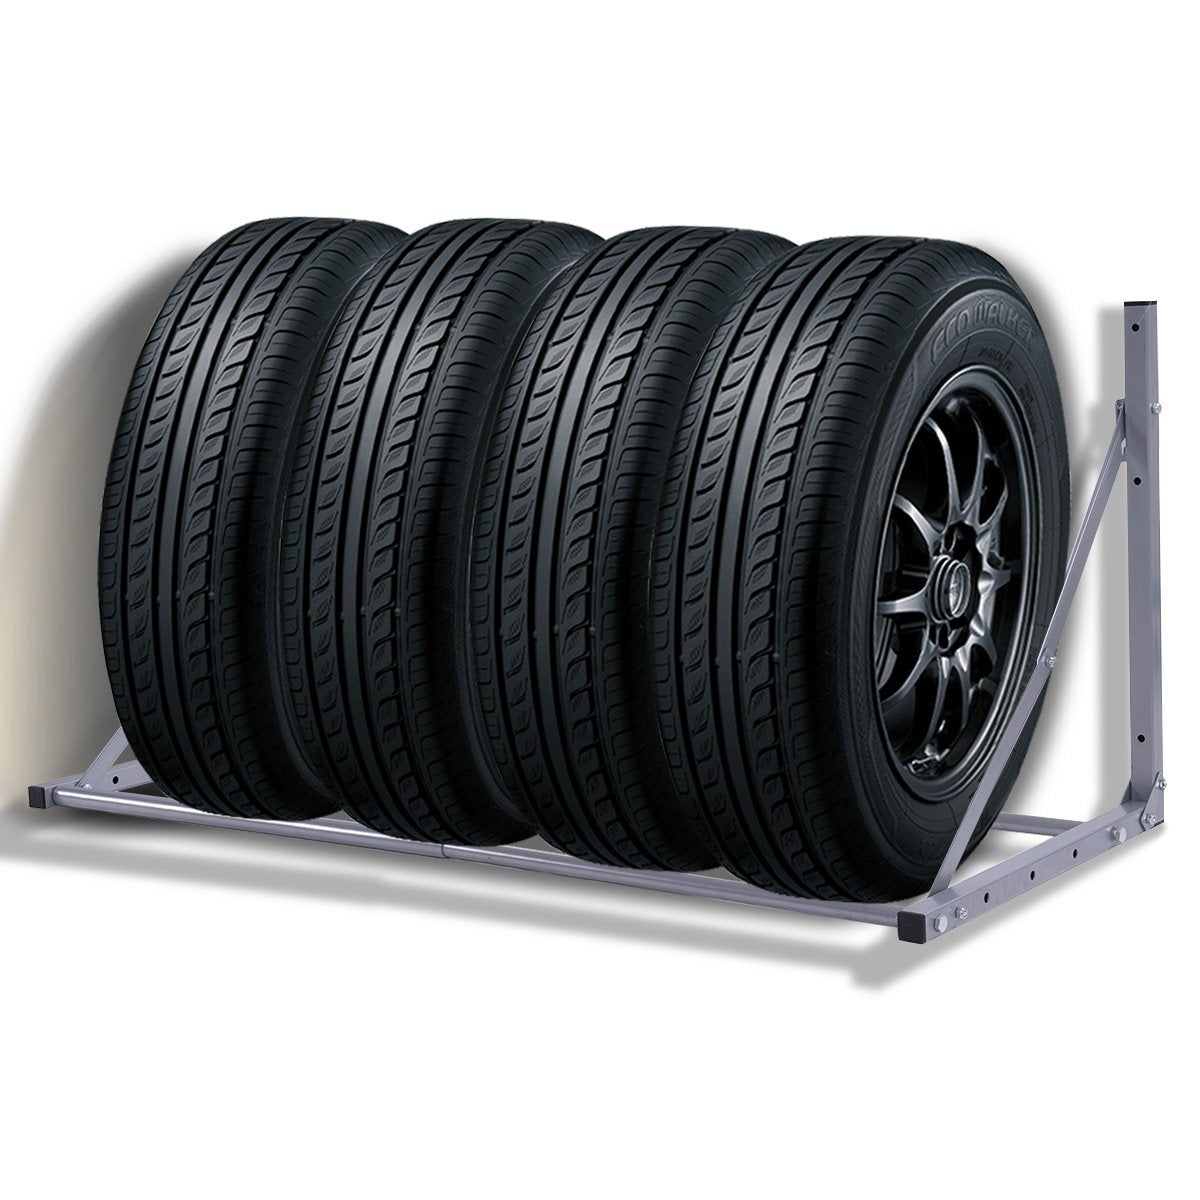 Goplus Tire Rack Wall Mount Folding Adjustable Wheel Storage Heavy Duty Steel 300 lb Capacity Holder (Silver)